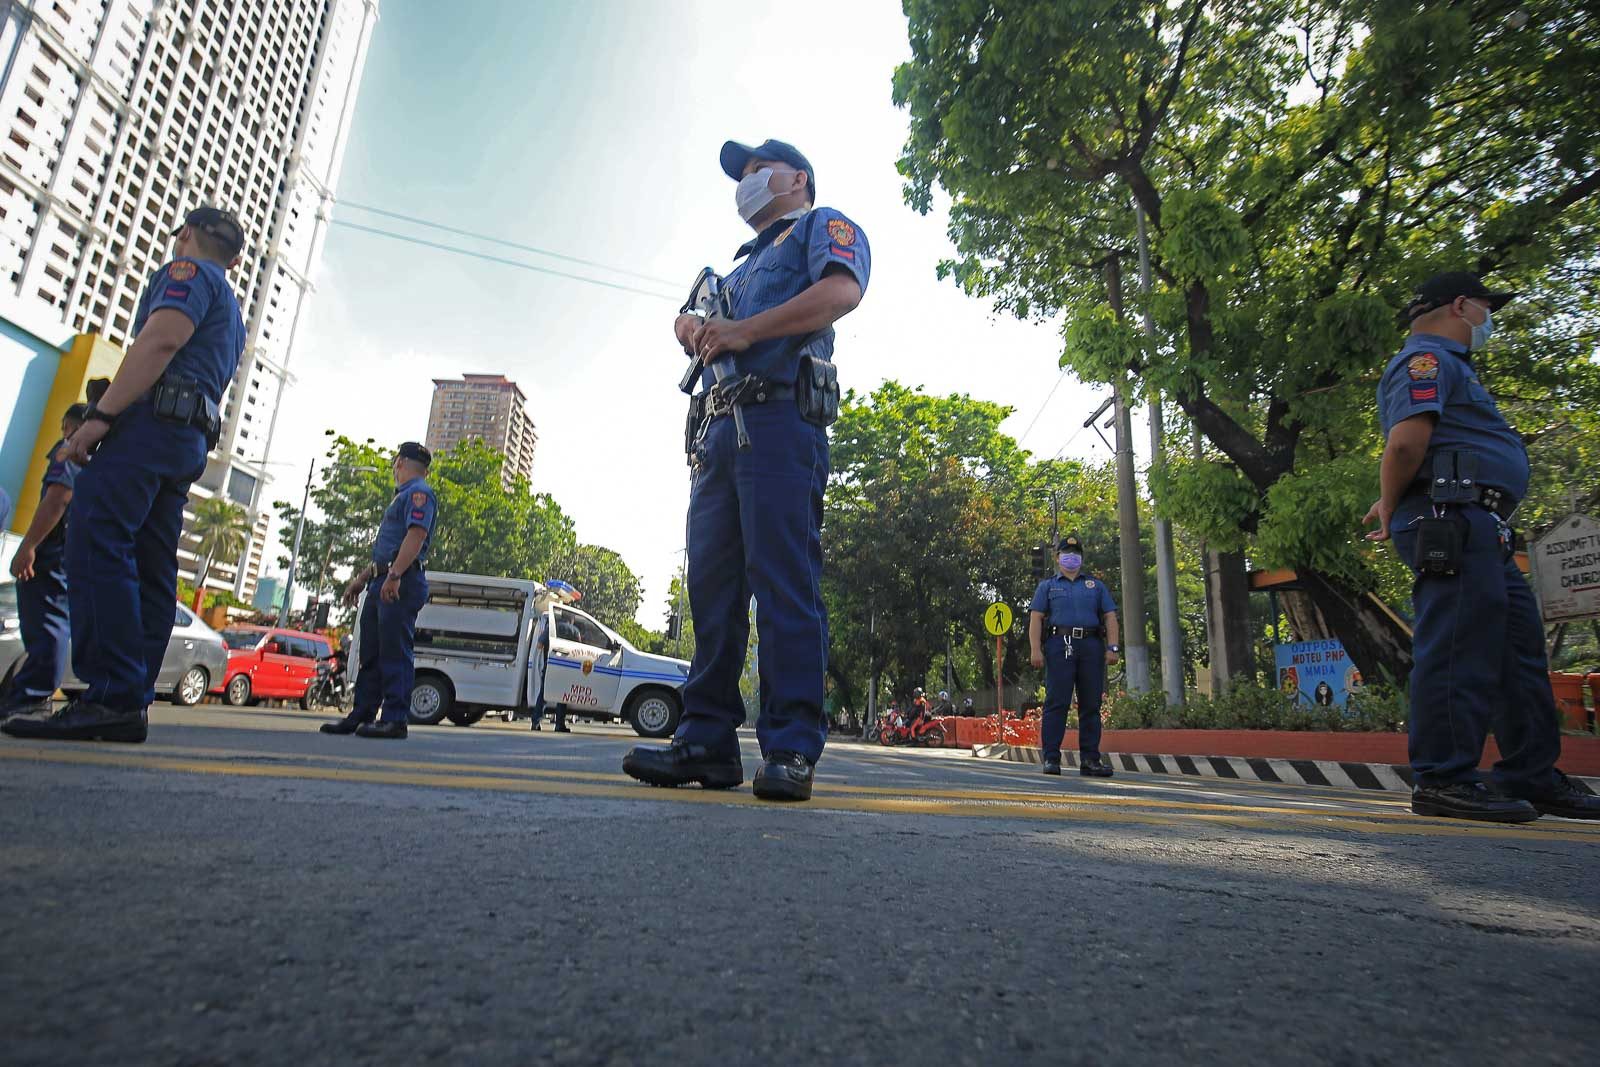 What we know so far: The Metro Manila coronavirus lockdown